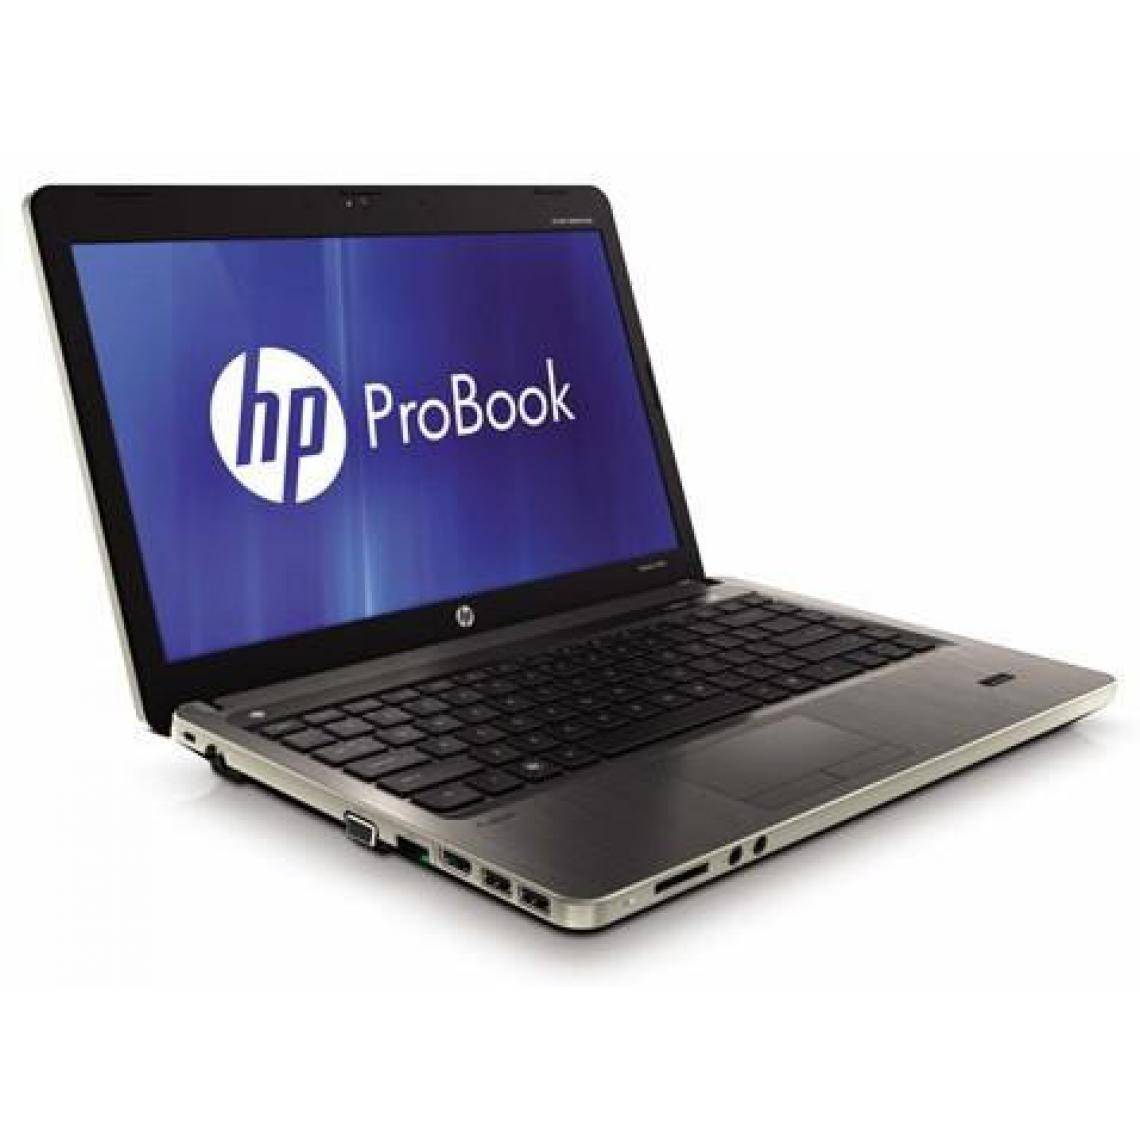 Hp - HP 6460B (6460B4240i5) - PC Portable